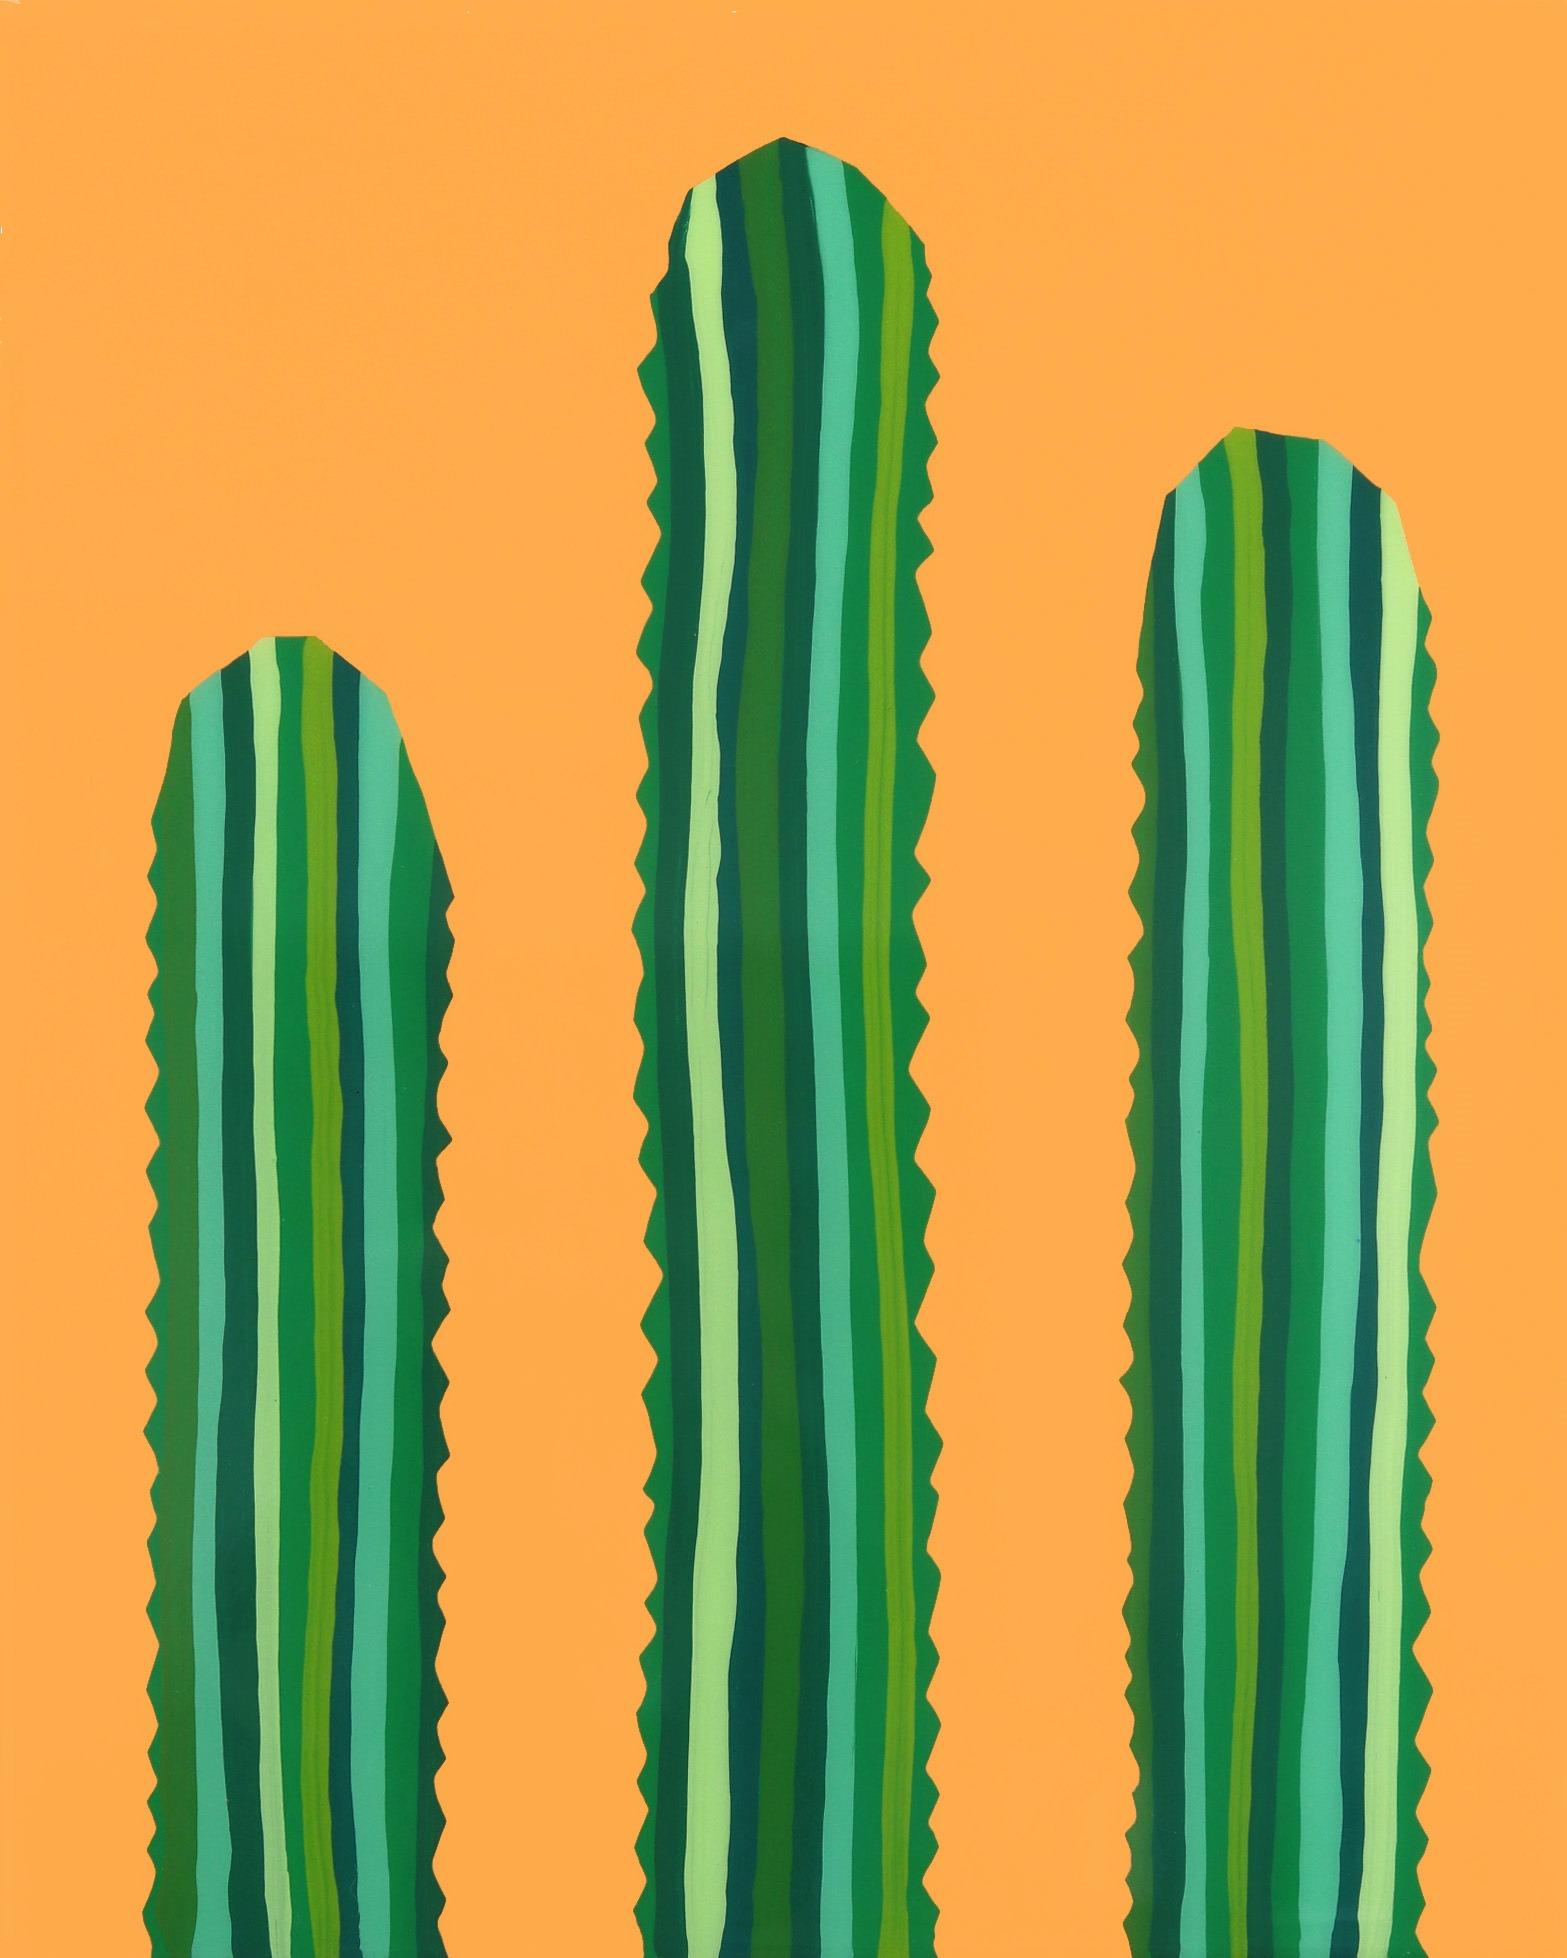 Velloso - Vibrant Orange Green Southwest Inspired Pop Art Cactus Painting